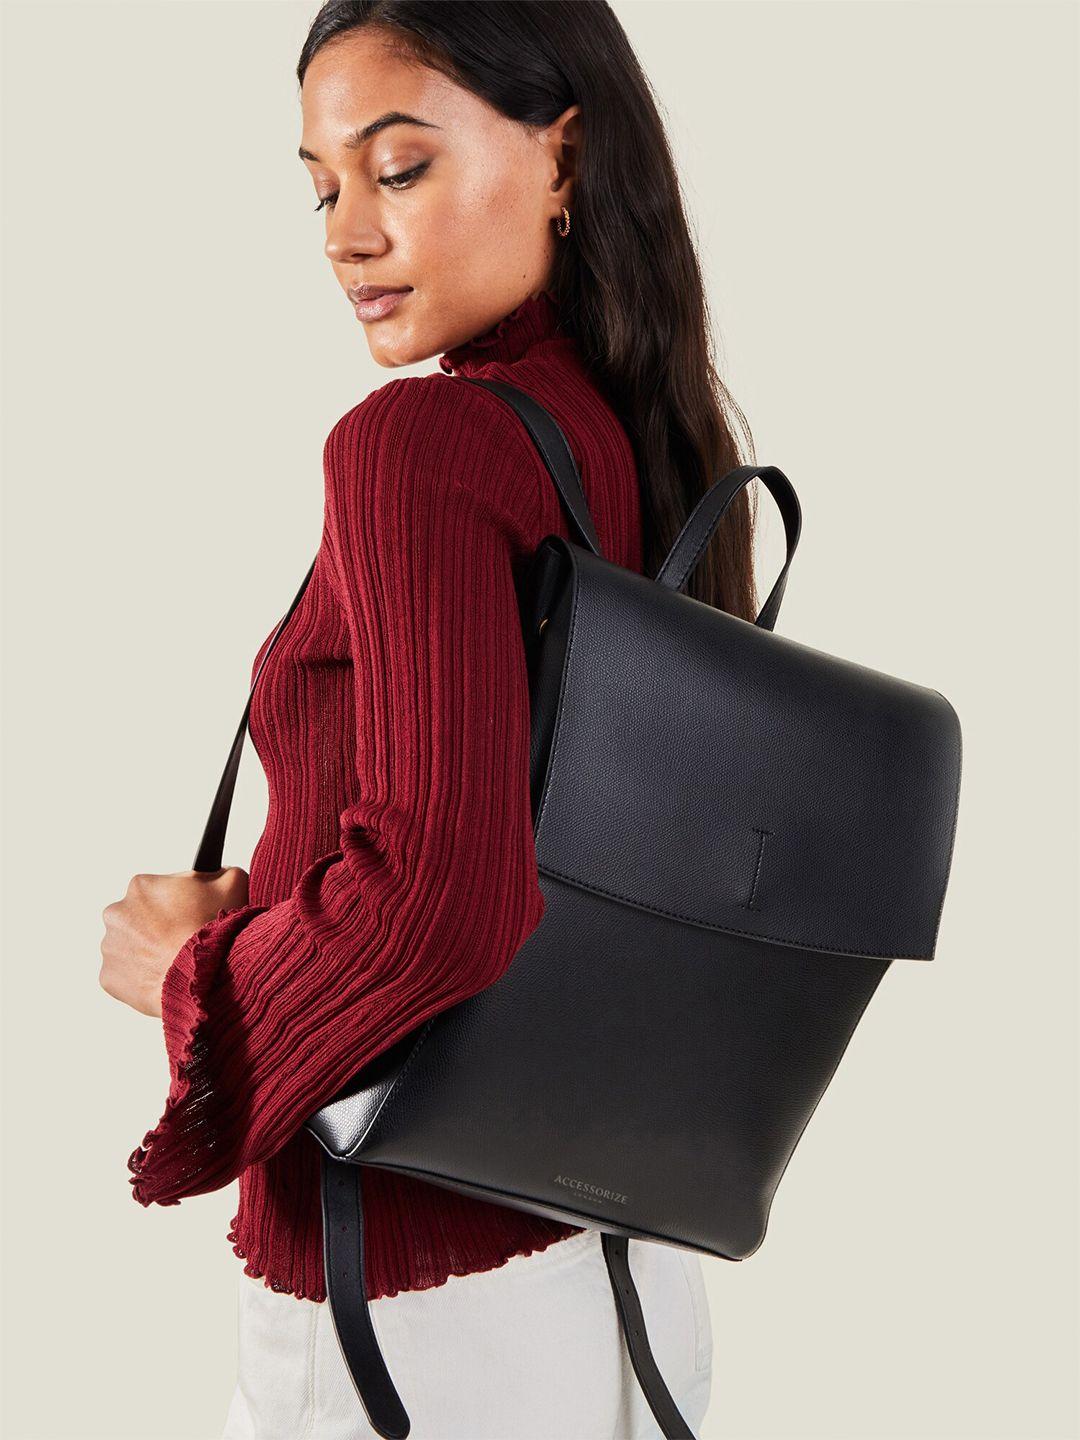 accessorize women backpack